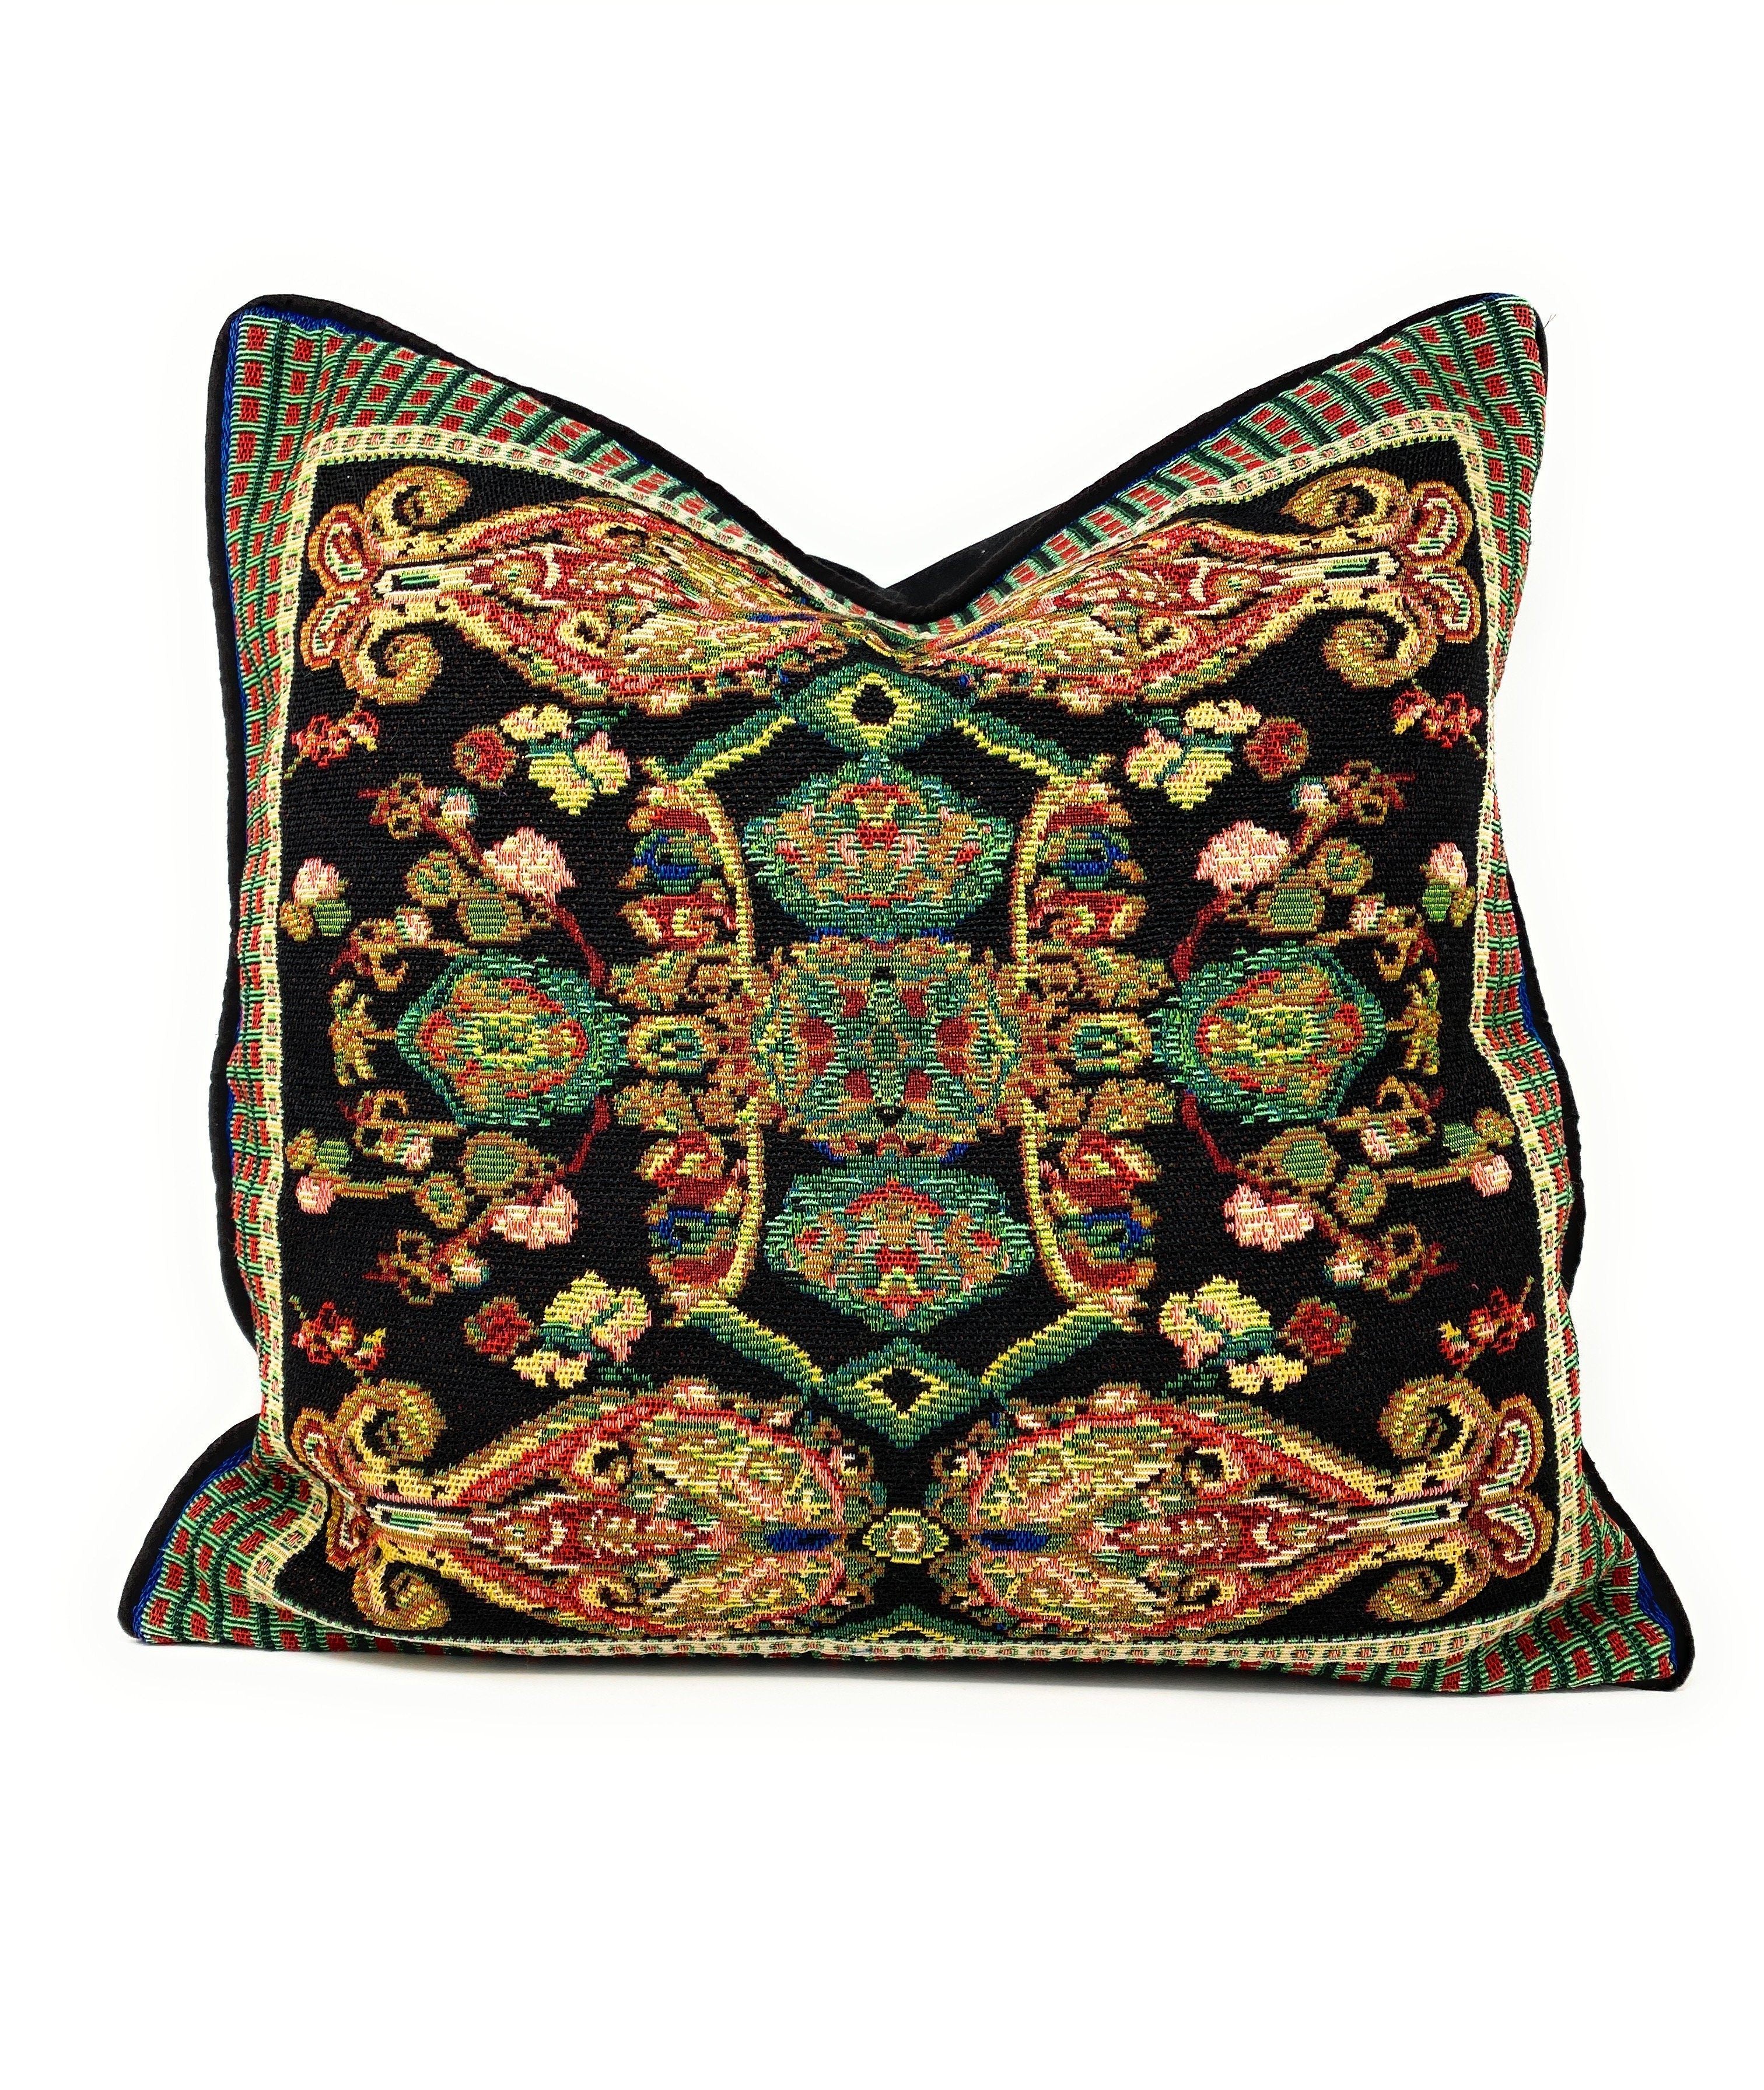 Tache Elegant Black Ornate Paisley Woven Tapestry Throw Pillow Cover (18192) - Tache Home Fashion